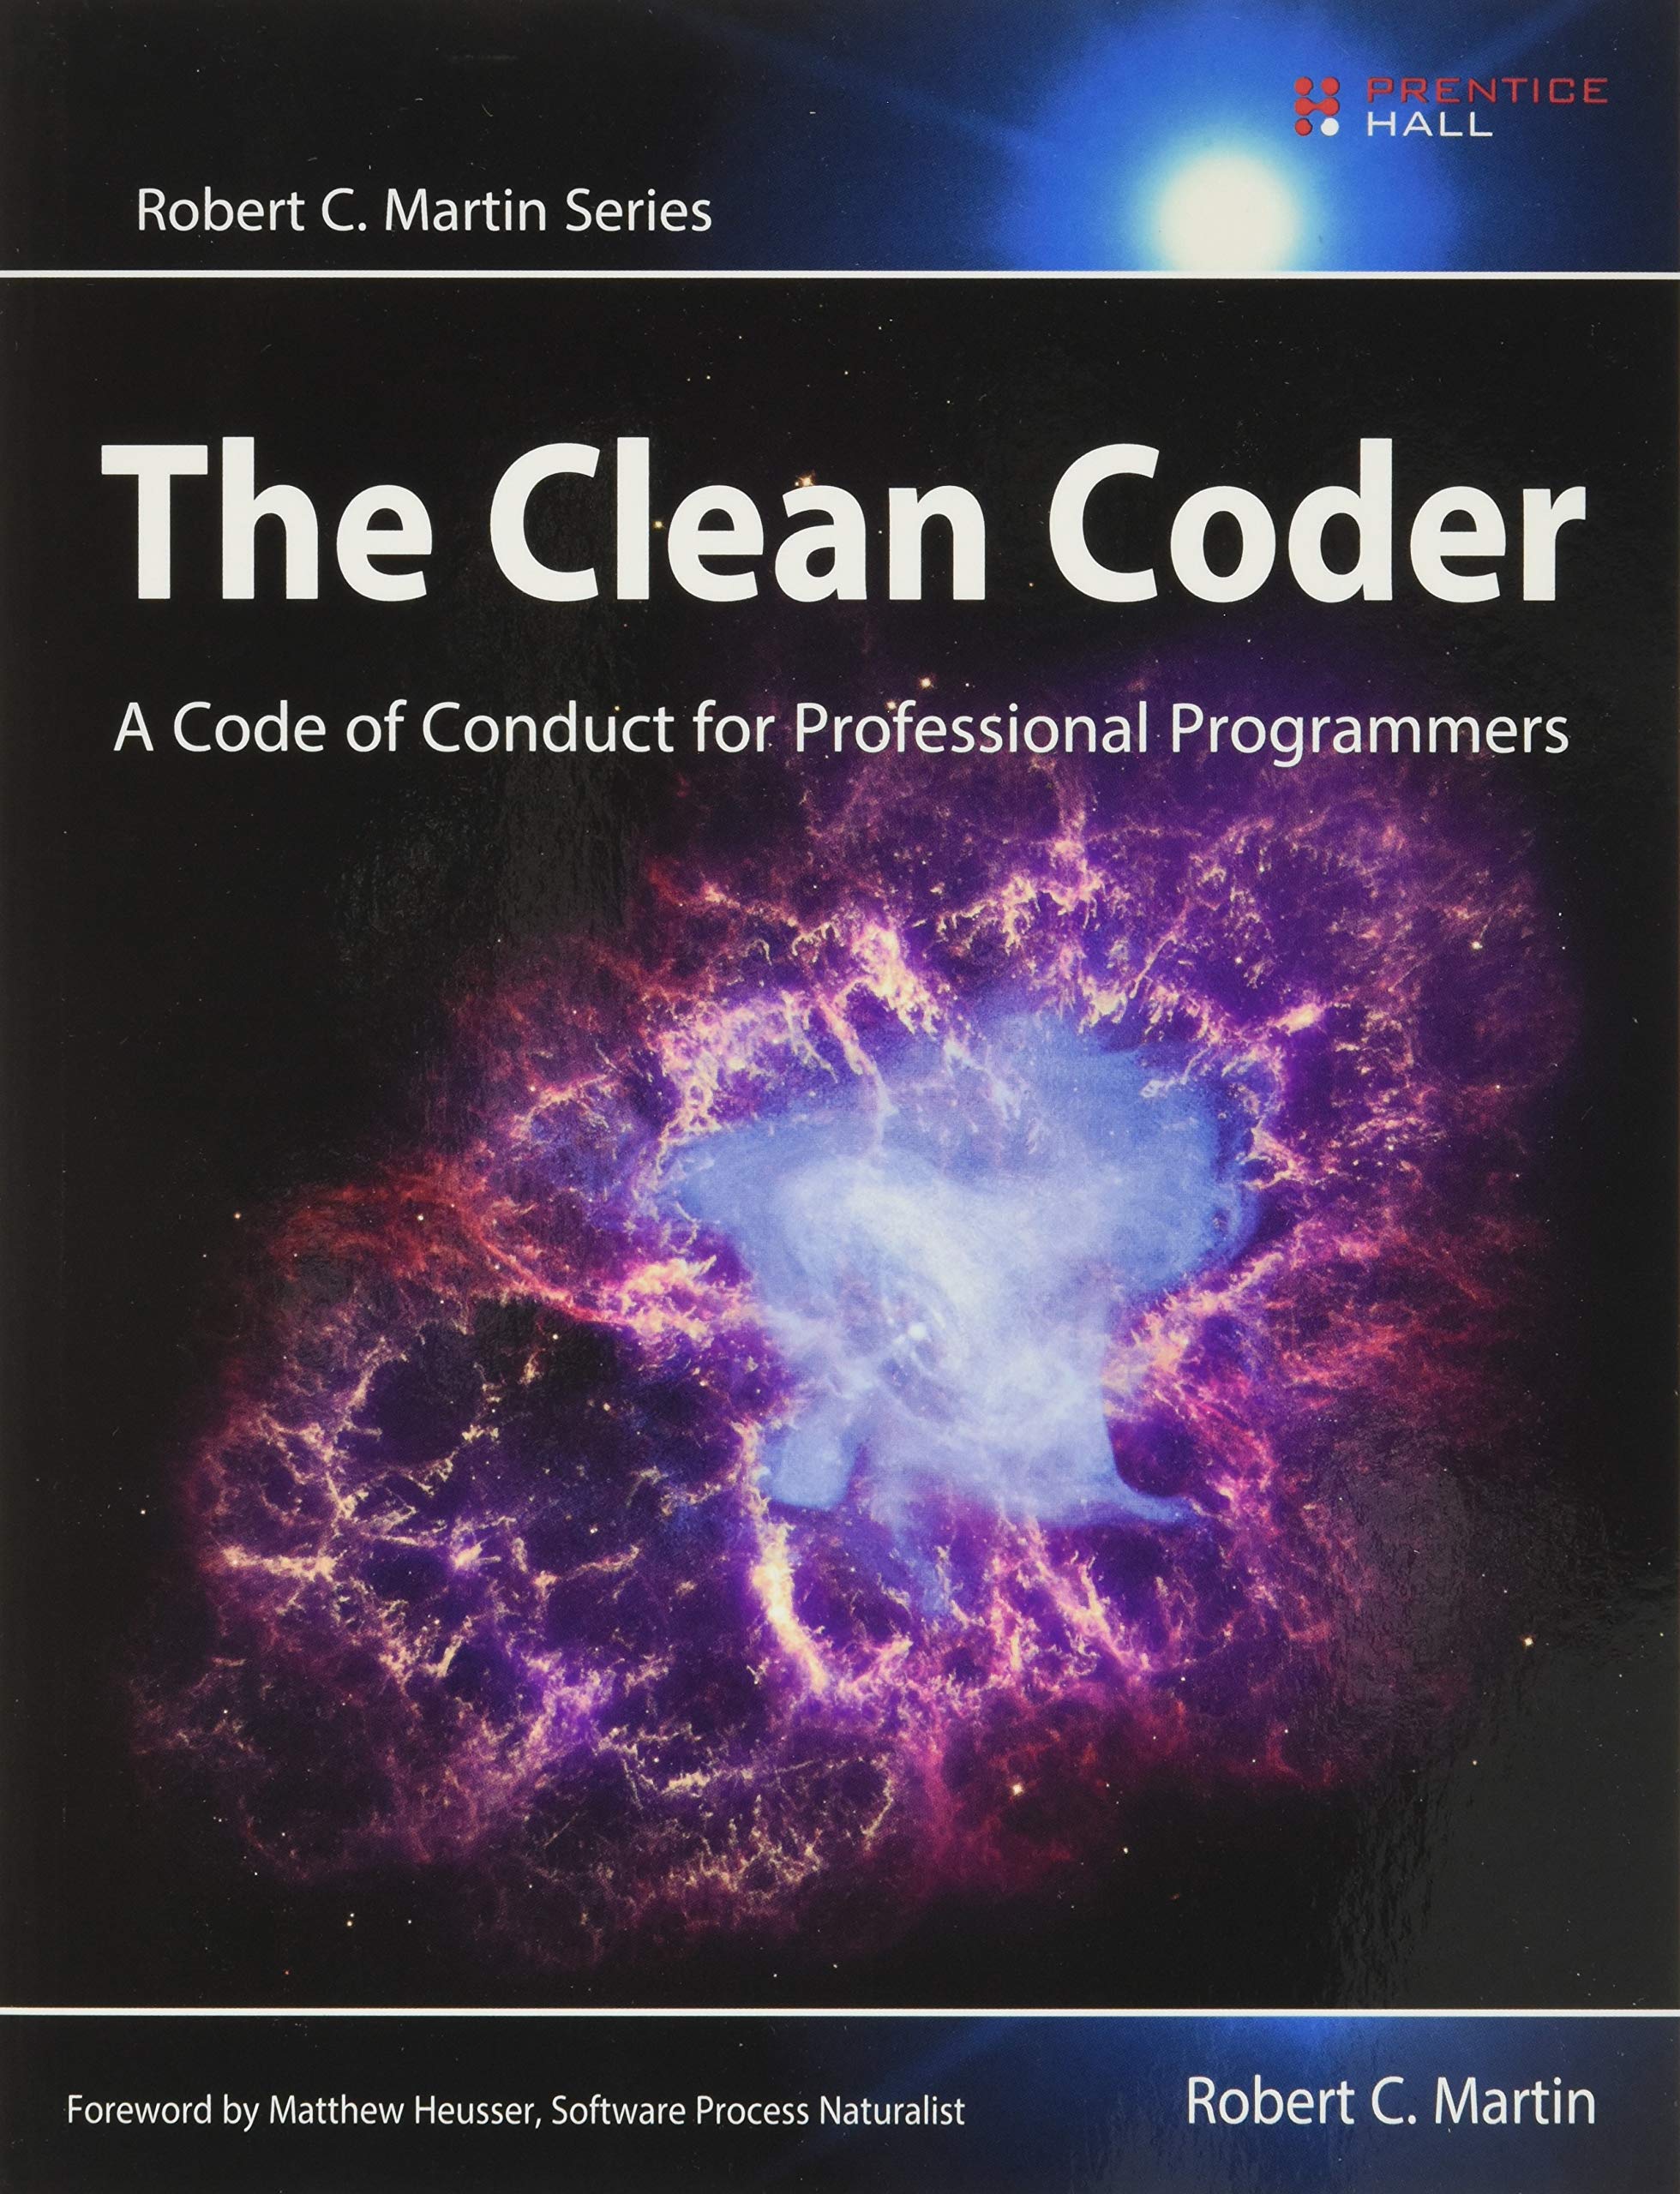 Clean Coder, book by Robert C. Martin